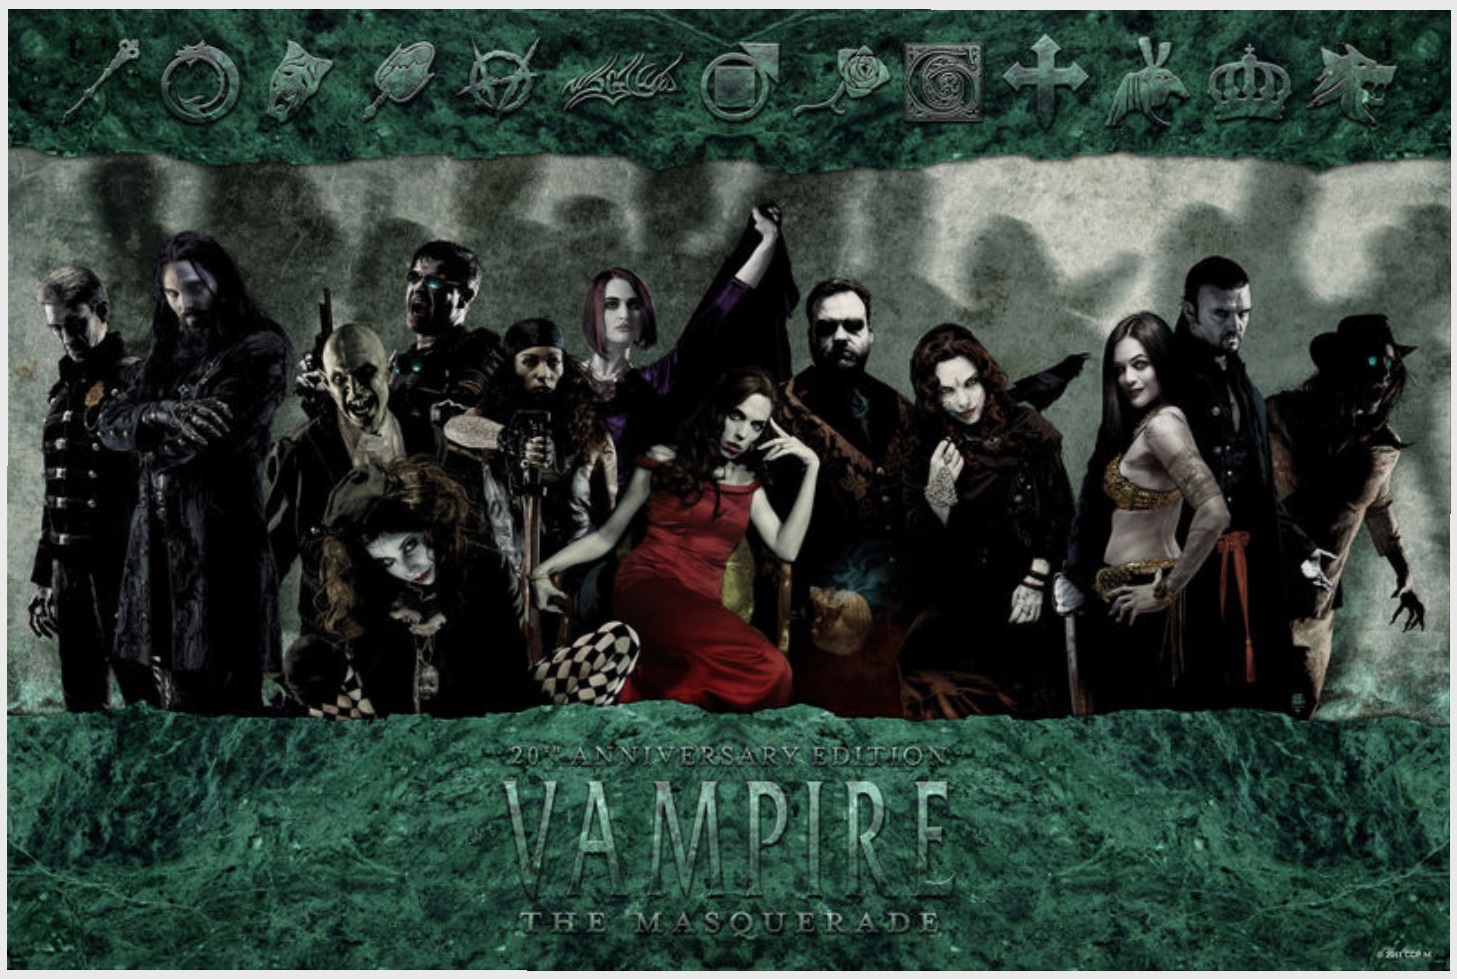 Vampire: The Masquerade - Coteries of New York Soundtrack, White Wolf Wiki